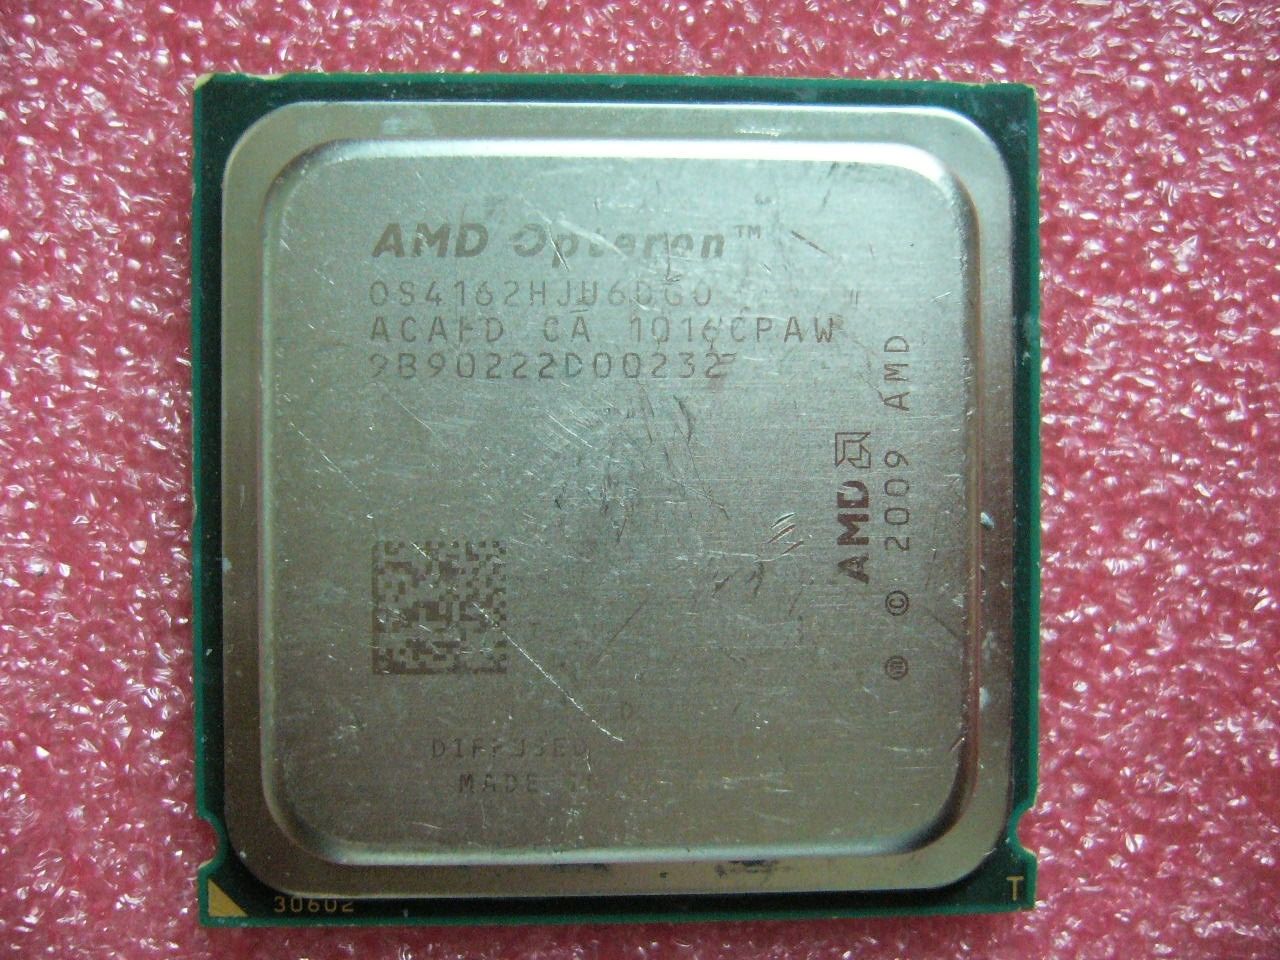 QTY 1x AMD Opteron 4162 EE 1.7 GHz Six Core (OS4162HJU6DGO) CPU Socket C32